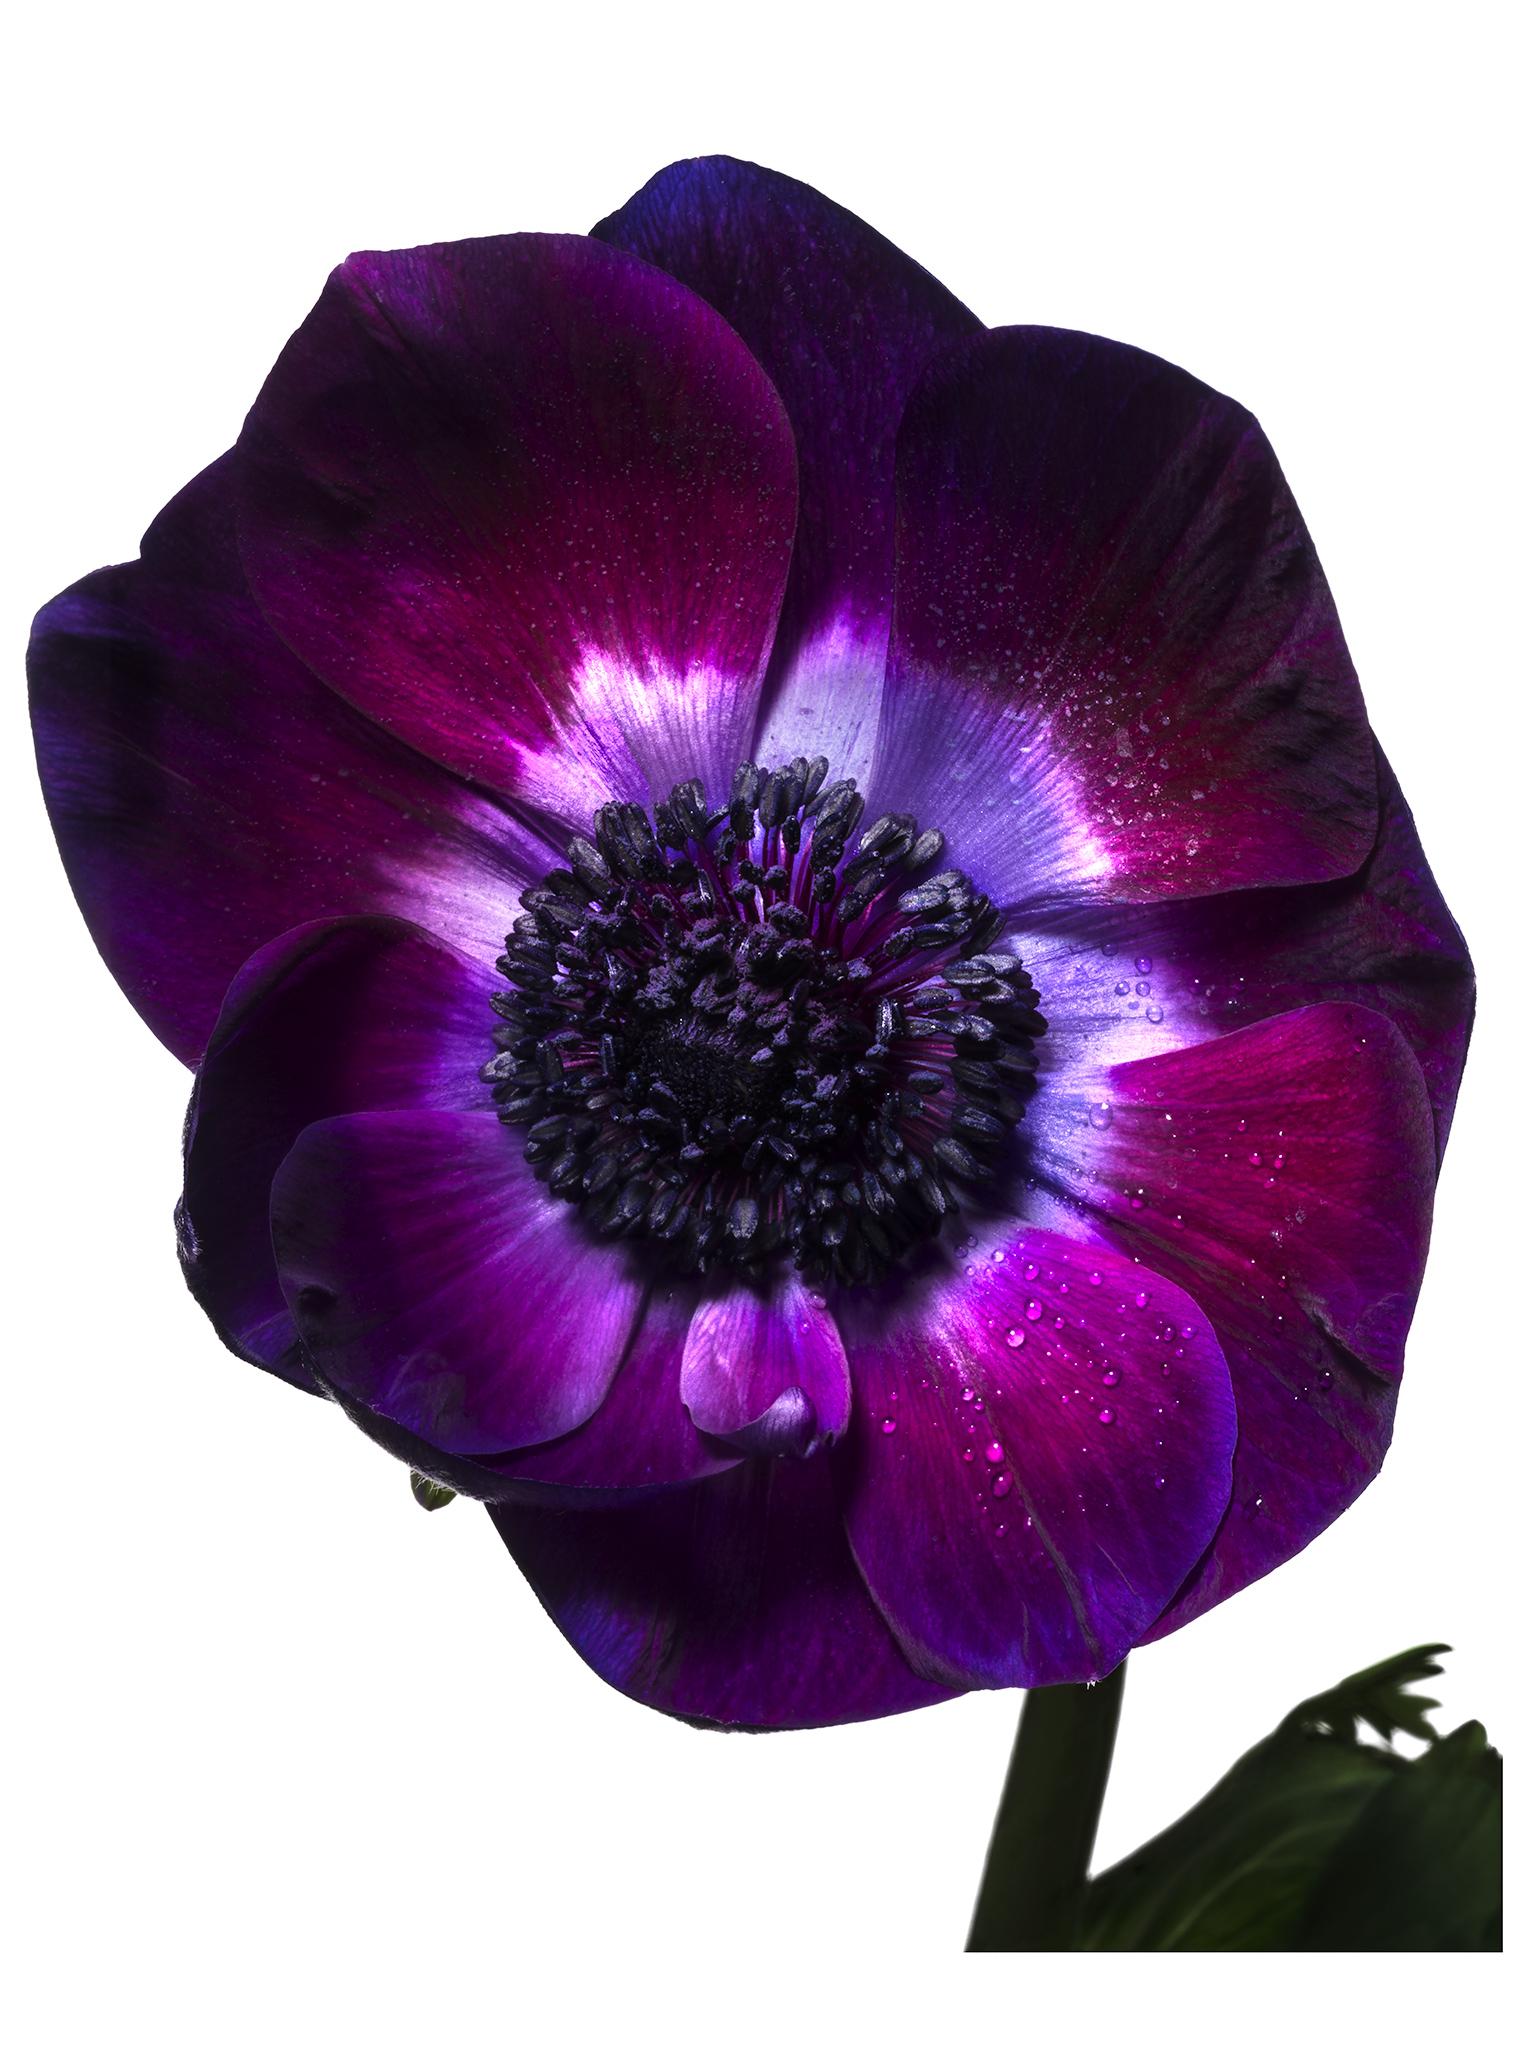 Flora Italiana ( Anemone Viola ) - large format botanical still life photograph